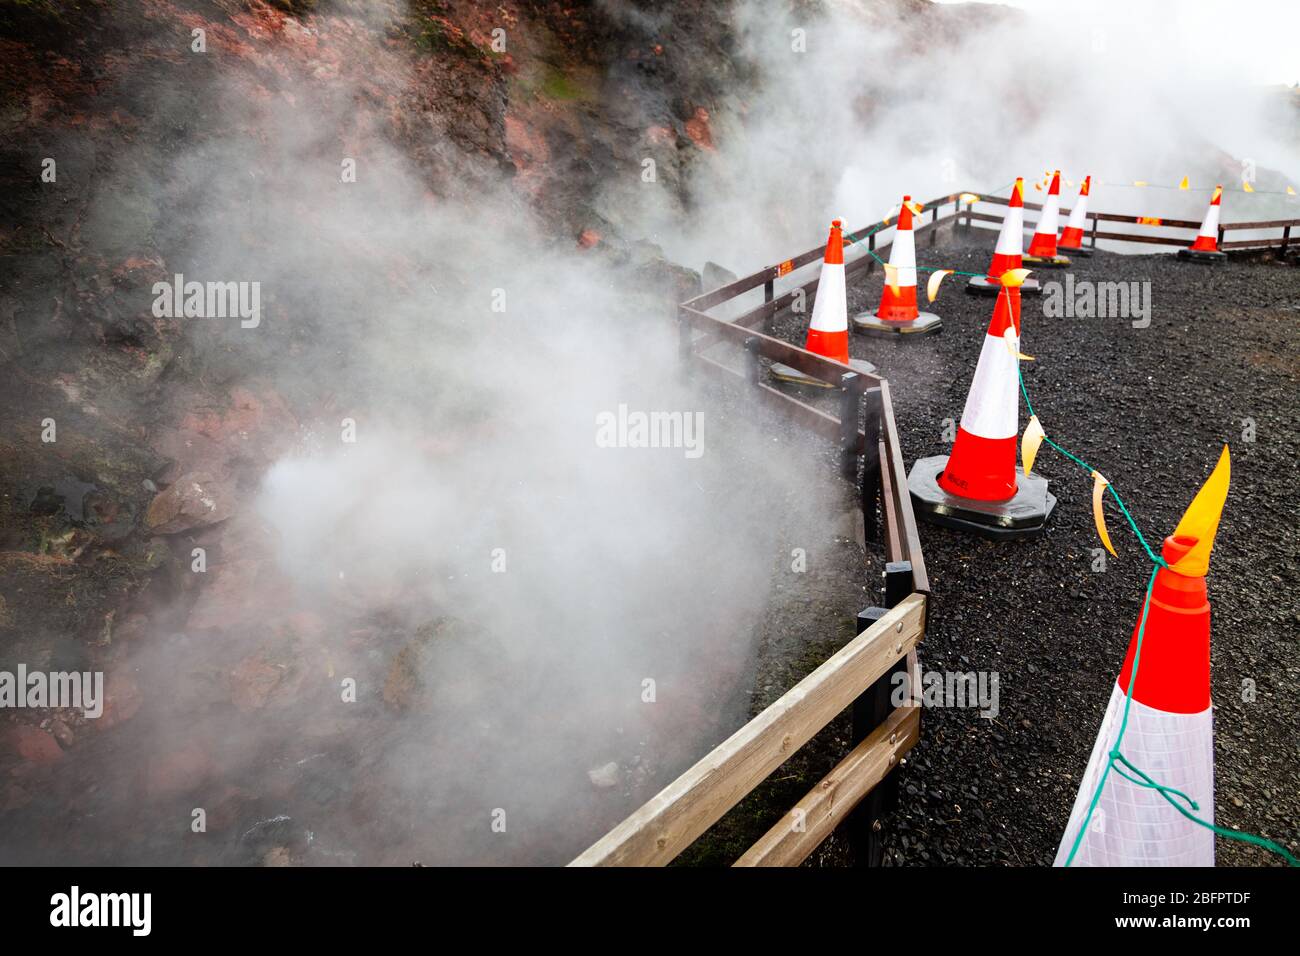 Steam rises off the Deildartunguhver thermal spring in winter, Borgarnes, Iceland, Polar Regions Stock Photo